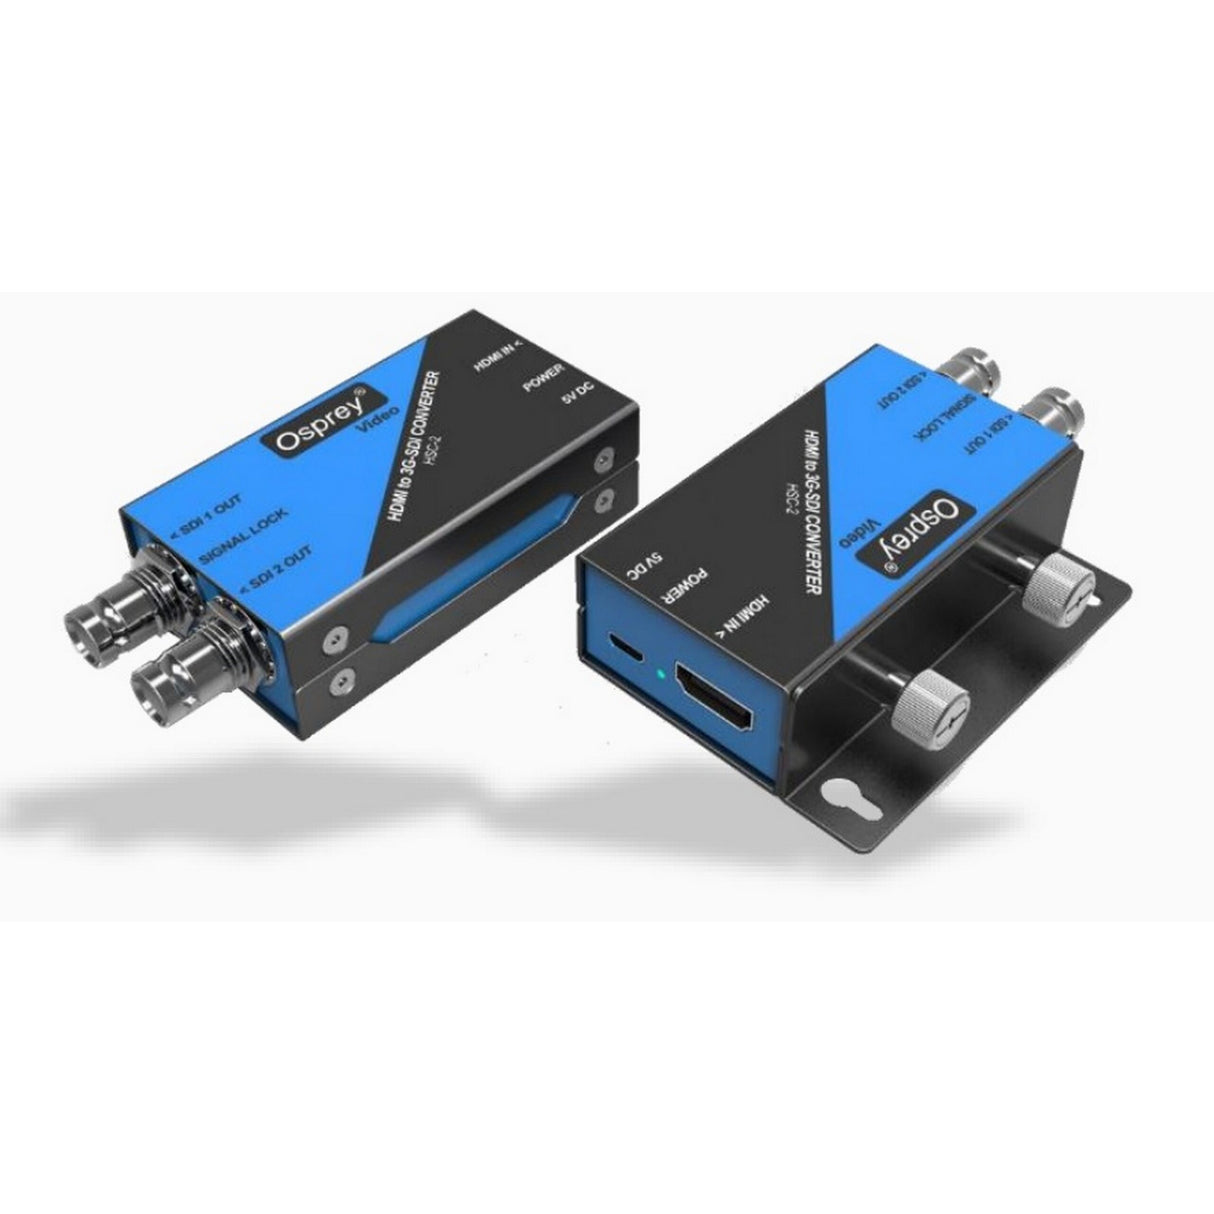 Osprey Video HSC-2 HDMI to Dual 3G-SDI Micro Converter